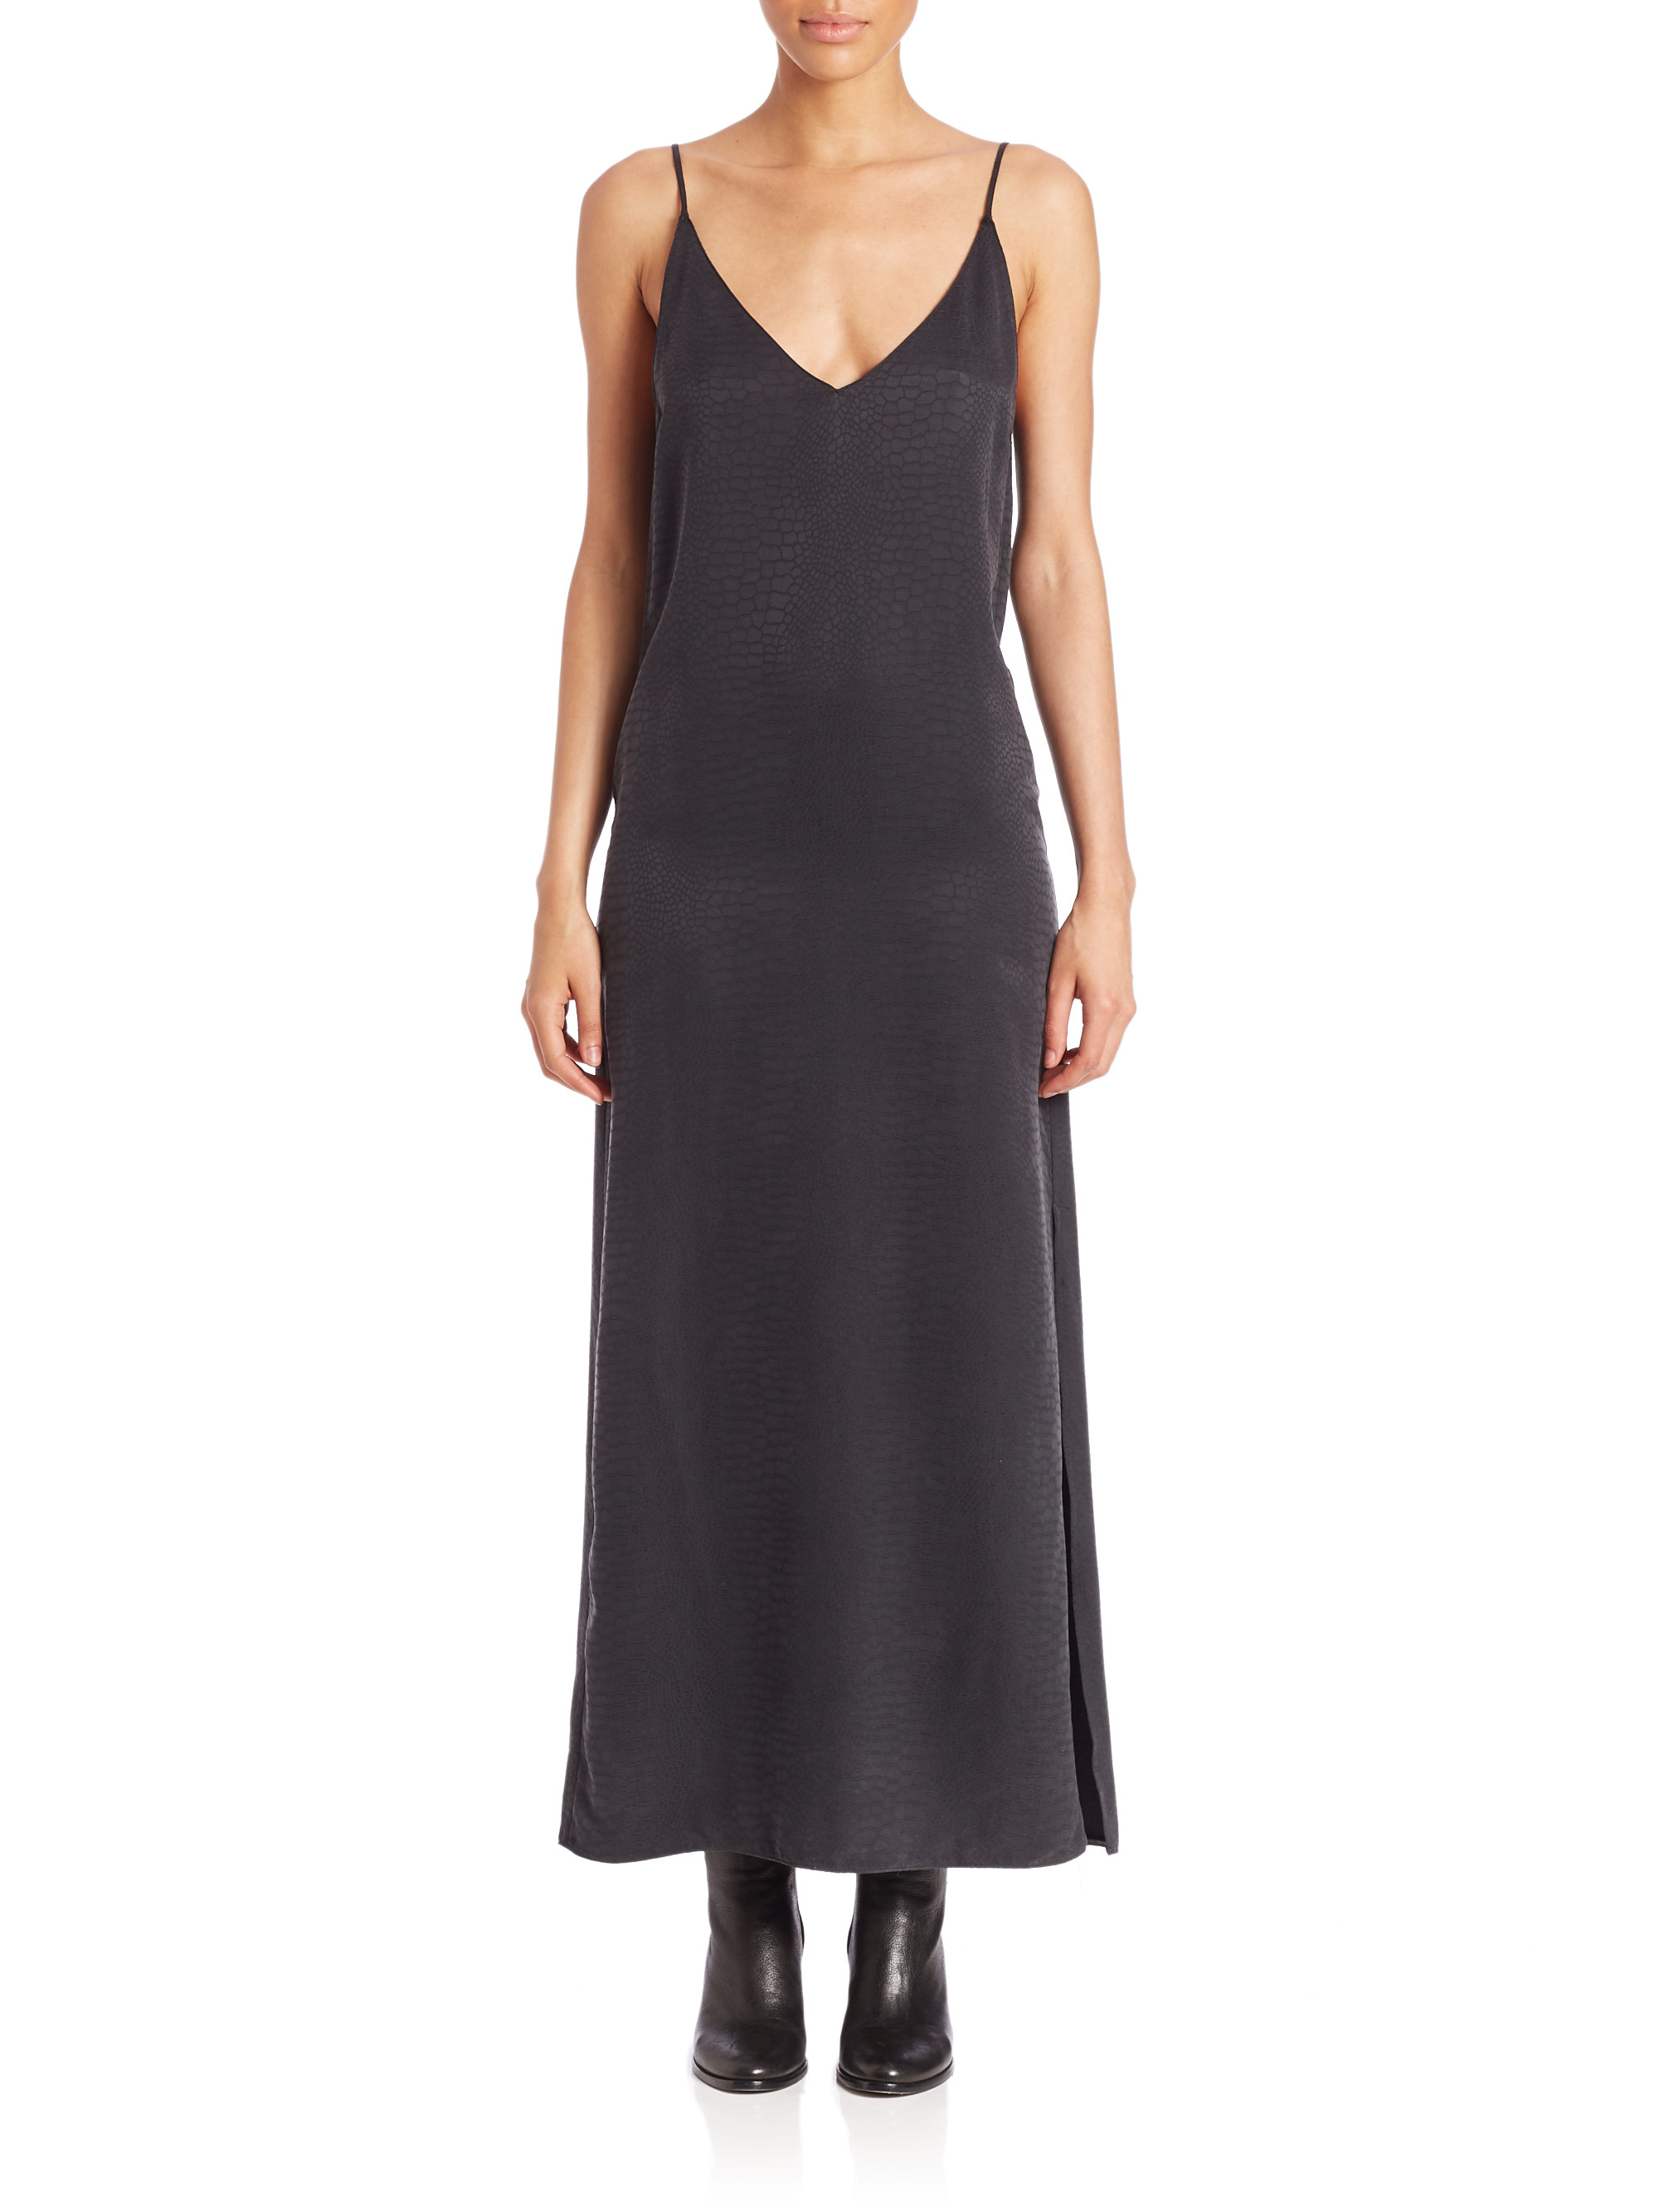 Lyst - Equipment Raquel Silk Python-print Slip Dress in Black